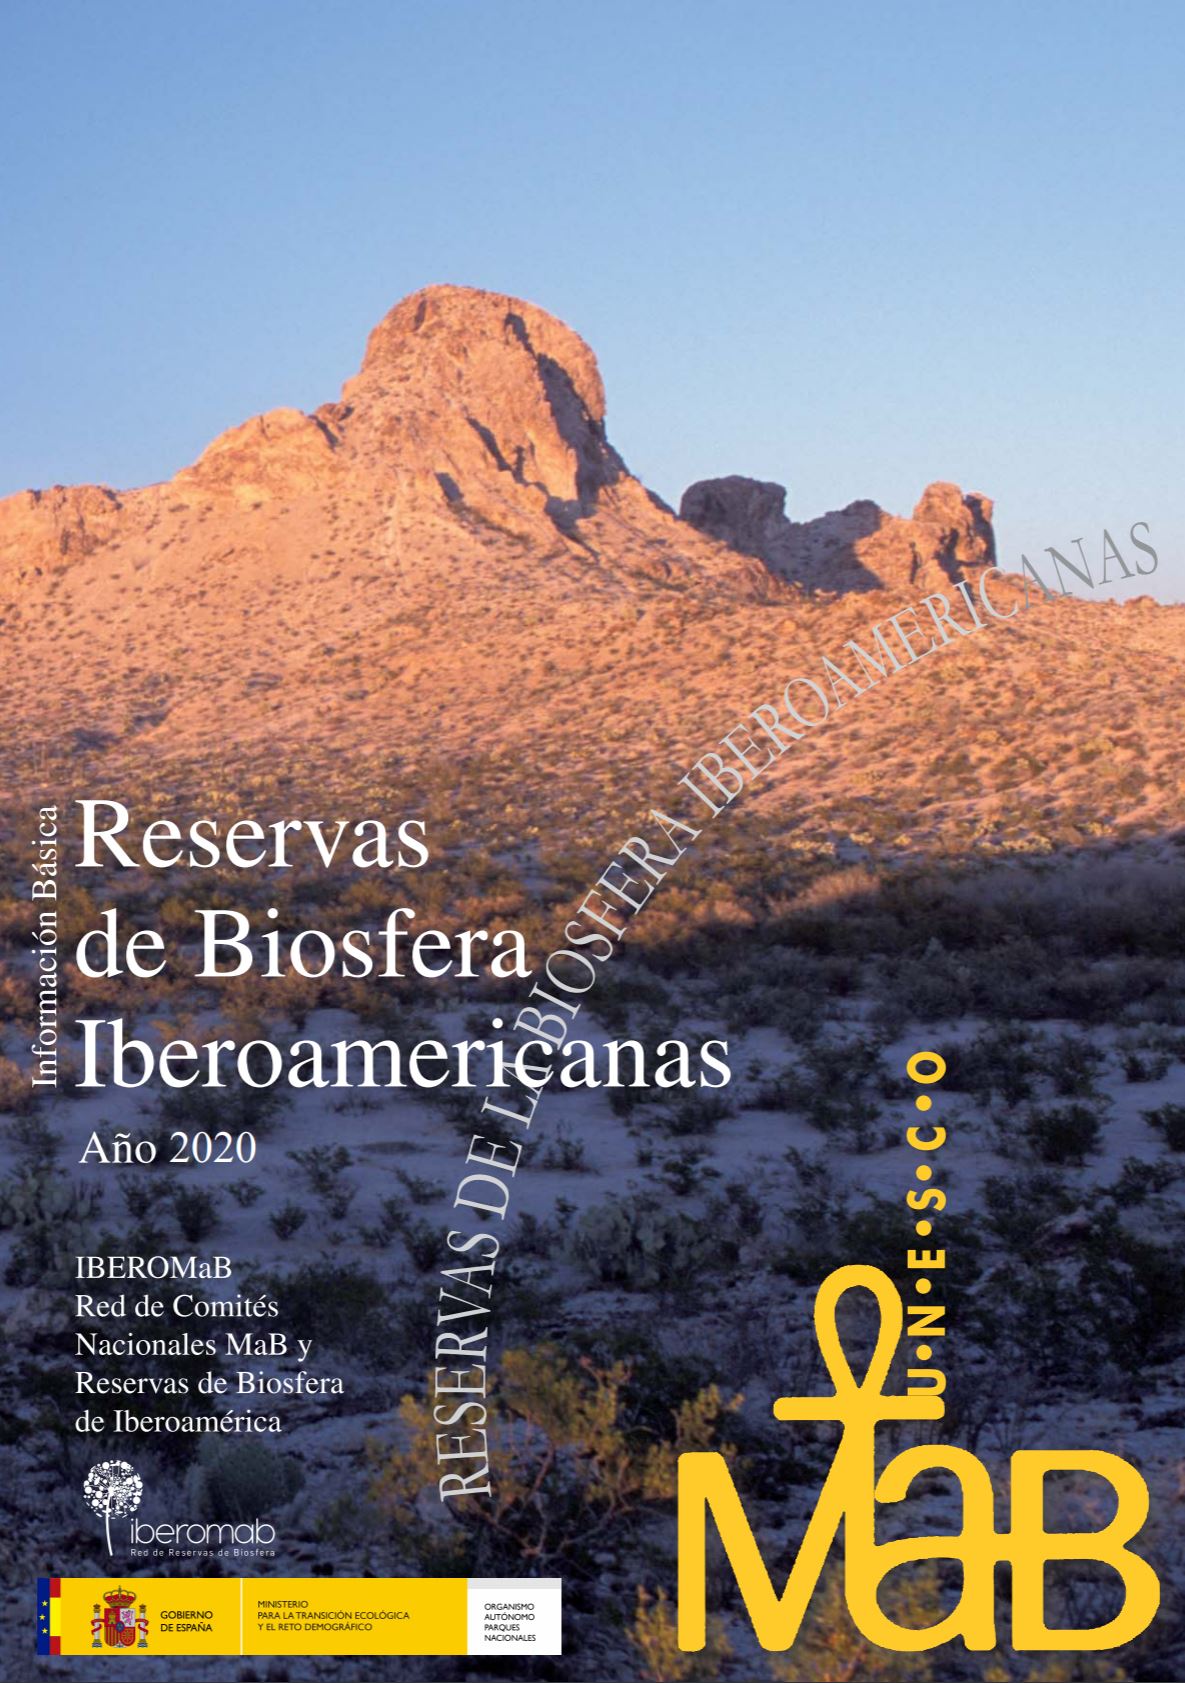 Catálogo de las Reservas de la Biosfera de la Red IberoMaB 2020